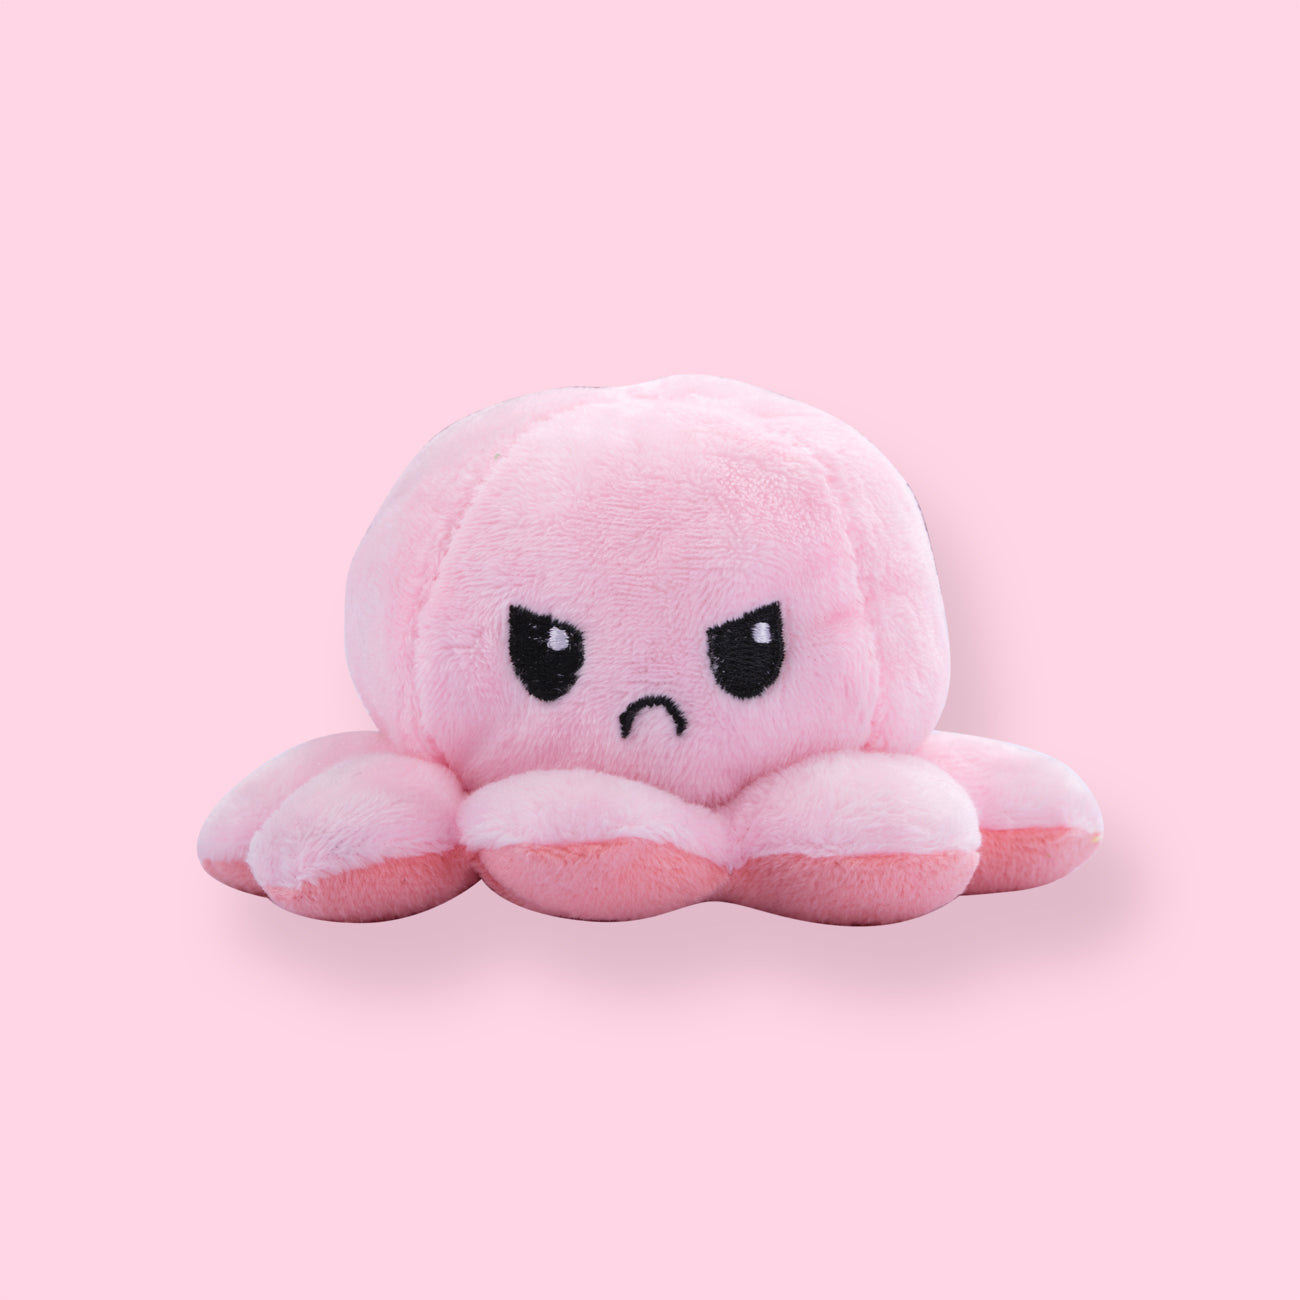 Plushy Octopus Keychain - Pink